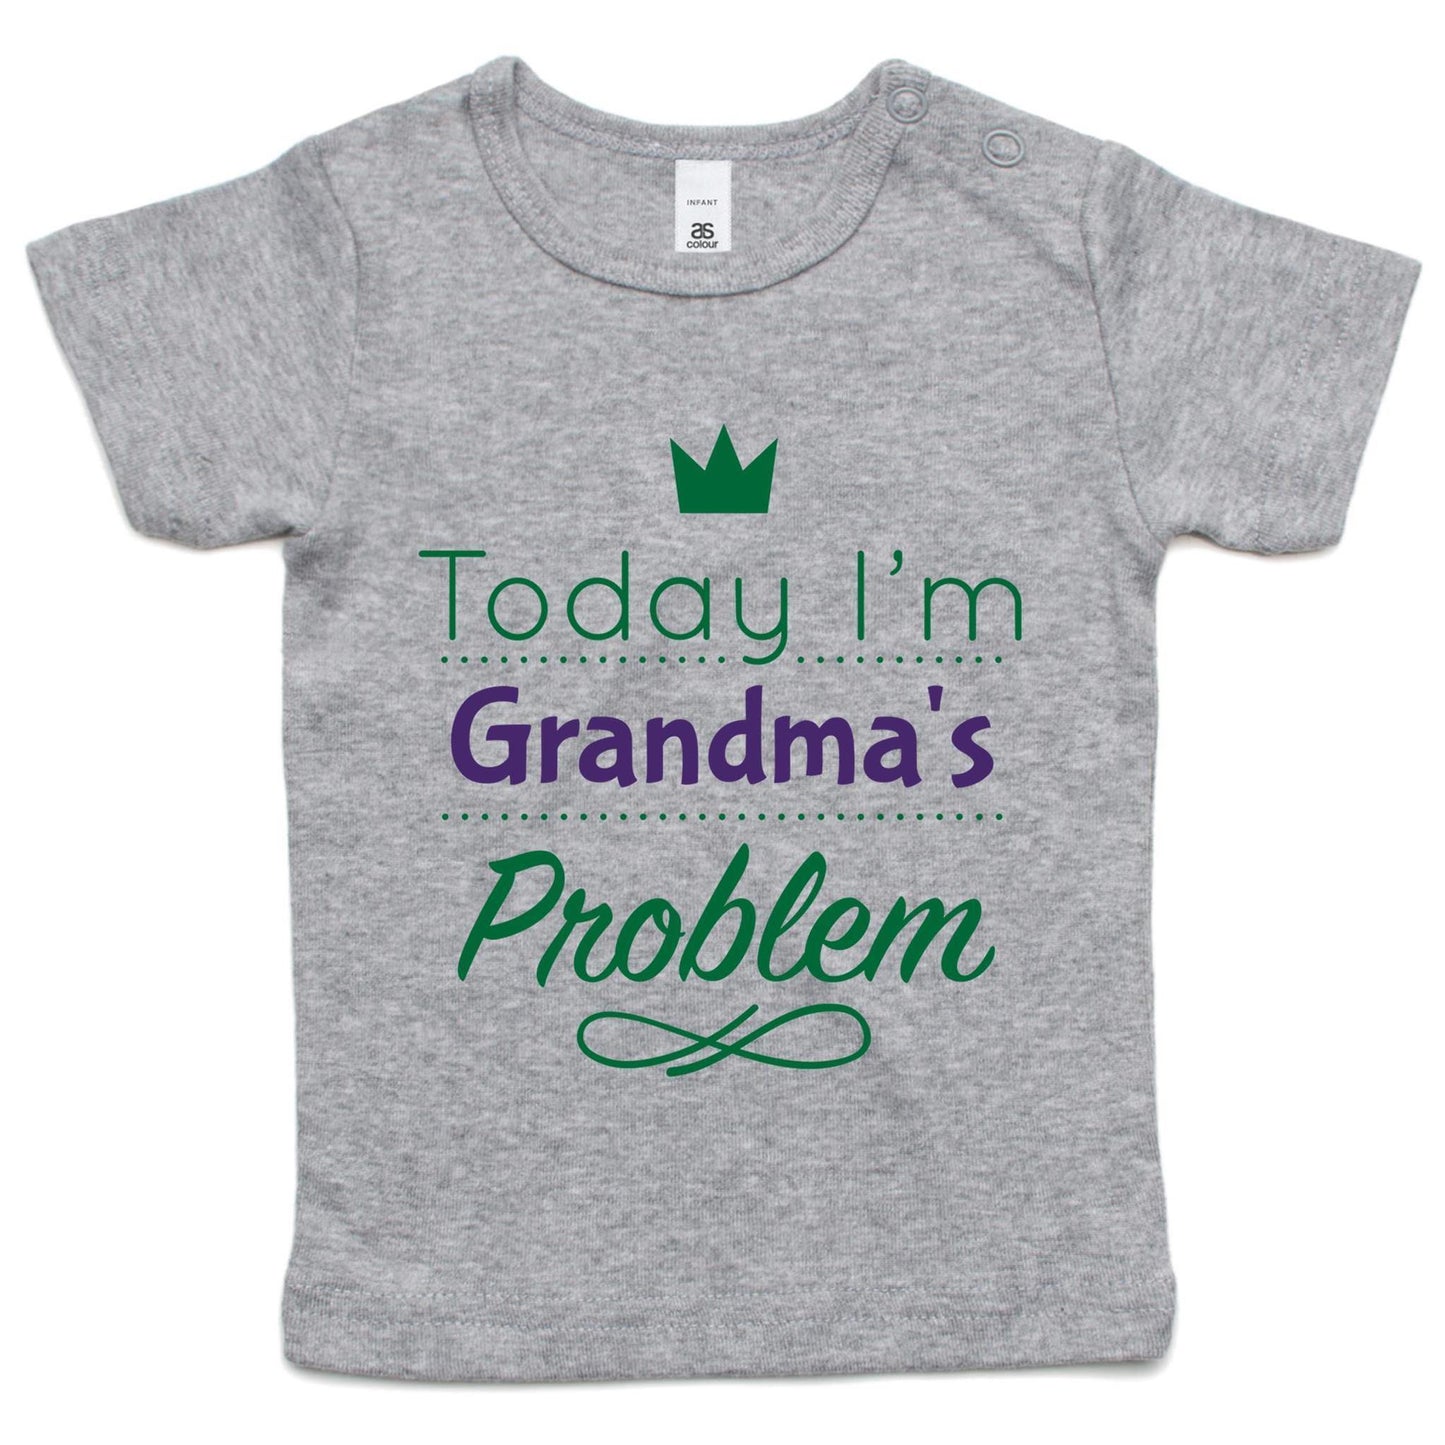 Today I'm Grandma's Problem - Baby T-shirt Grey Marle Baby T-shirt kids